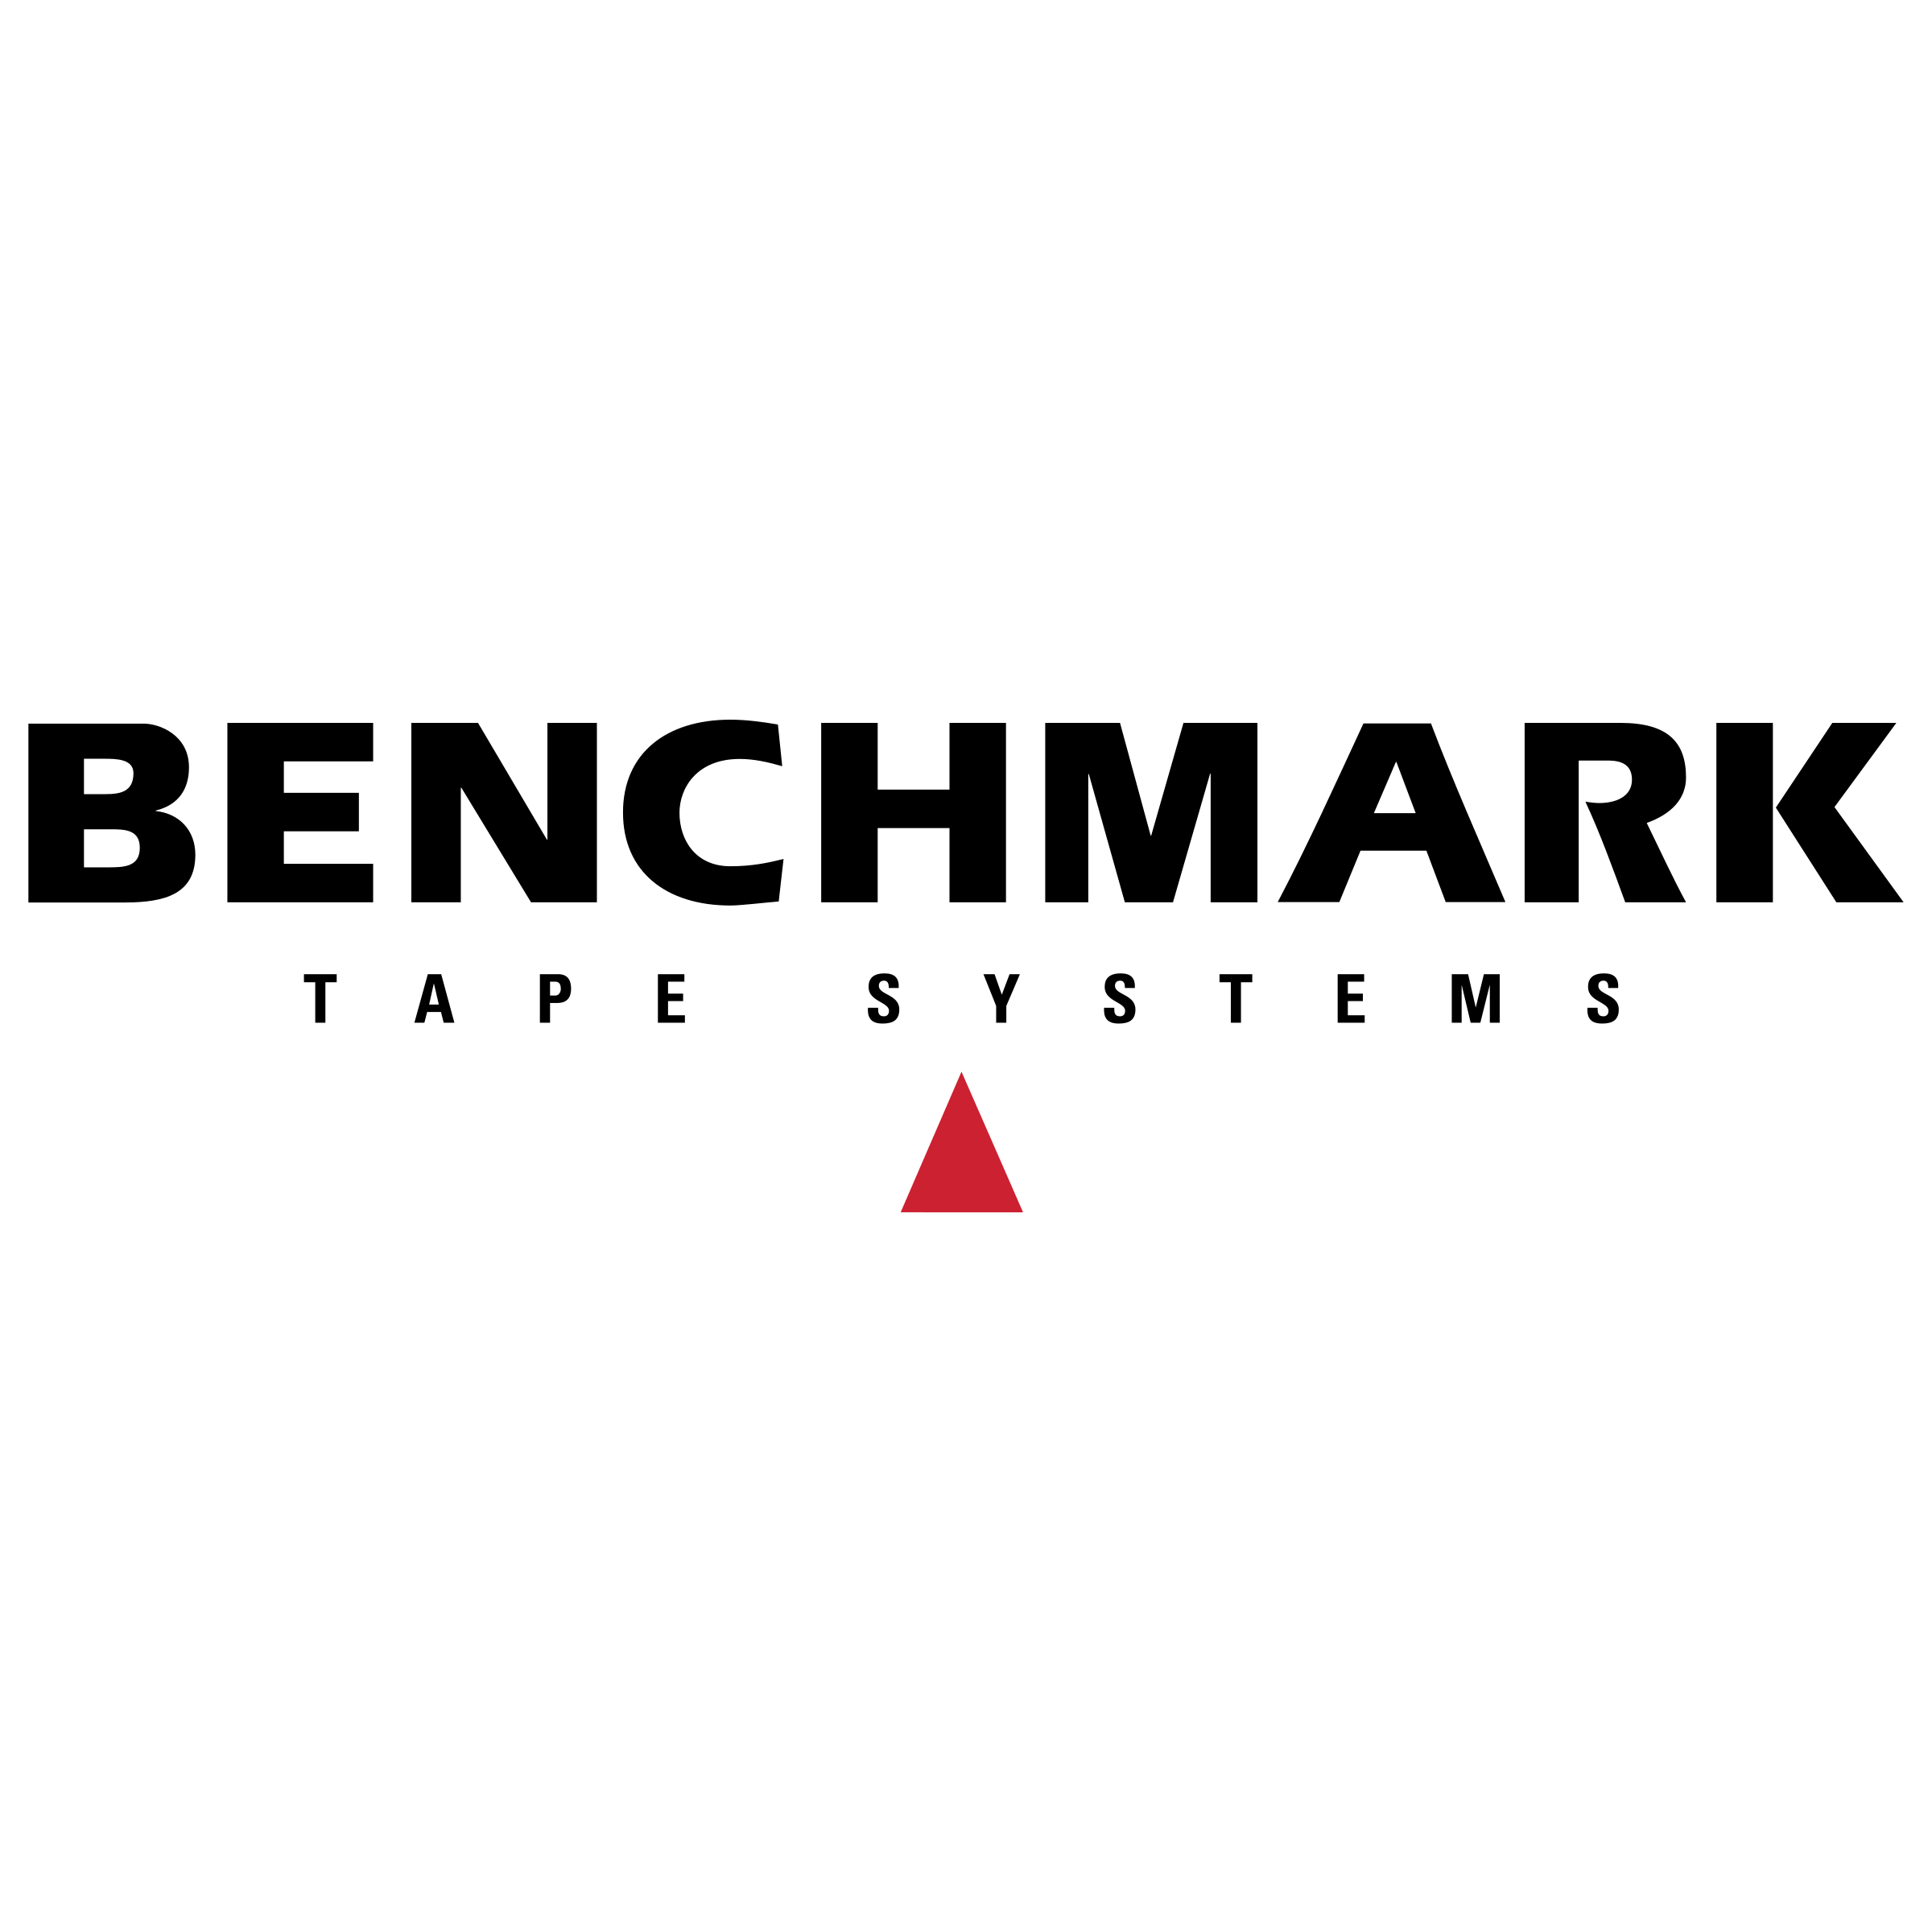 Benchmark Logo - Benchmark 01 Logo PNG Transparent & SVG Vector - Freebie Supply